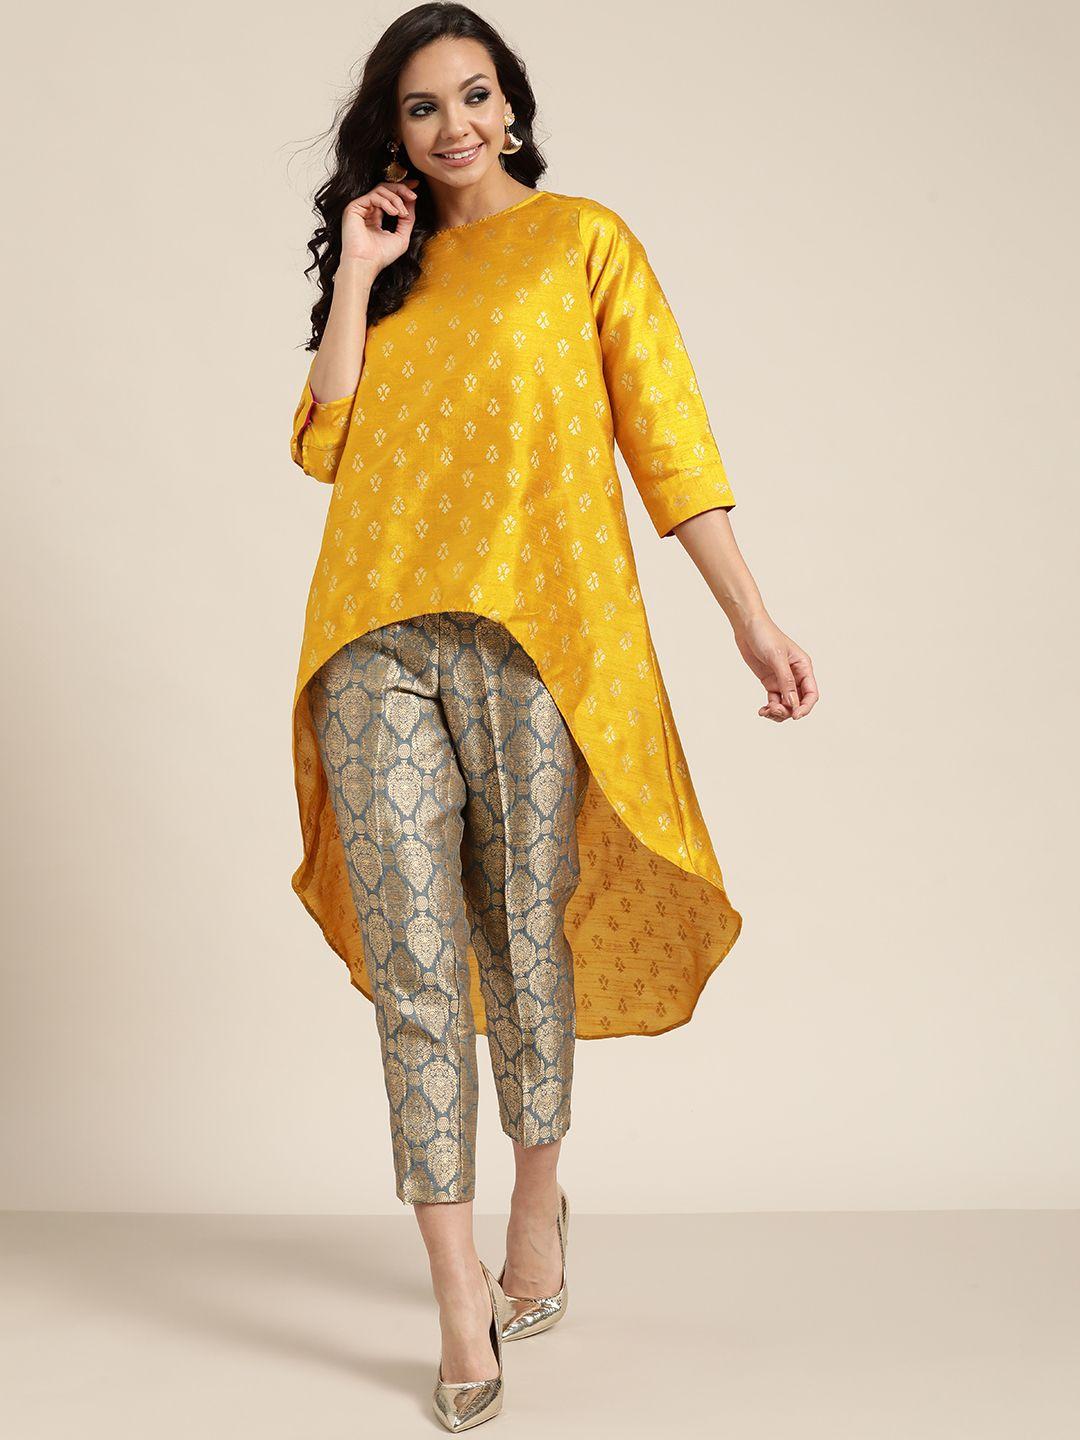 Shae by SASSAFRAS Mustard Yellow & Golden Printed Asymmetric Tunic